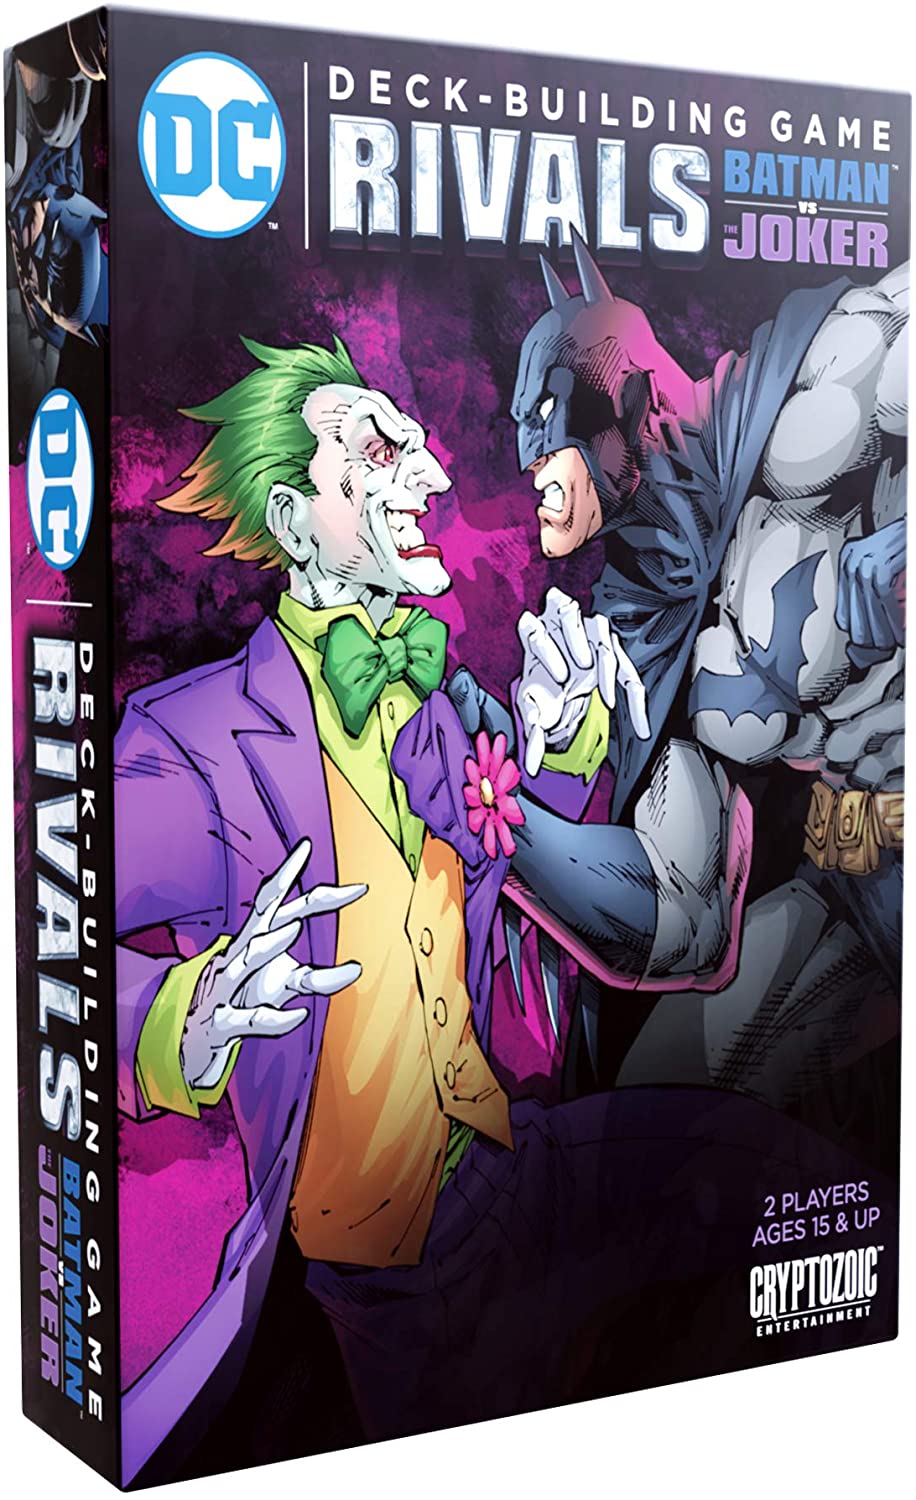 DC Deck Building Game: Rivals - Batman VS The Joker